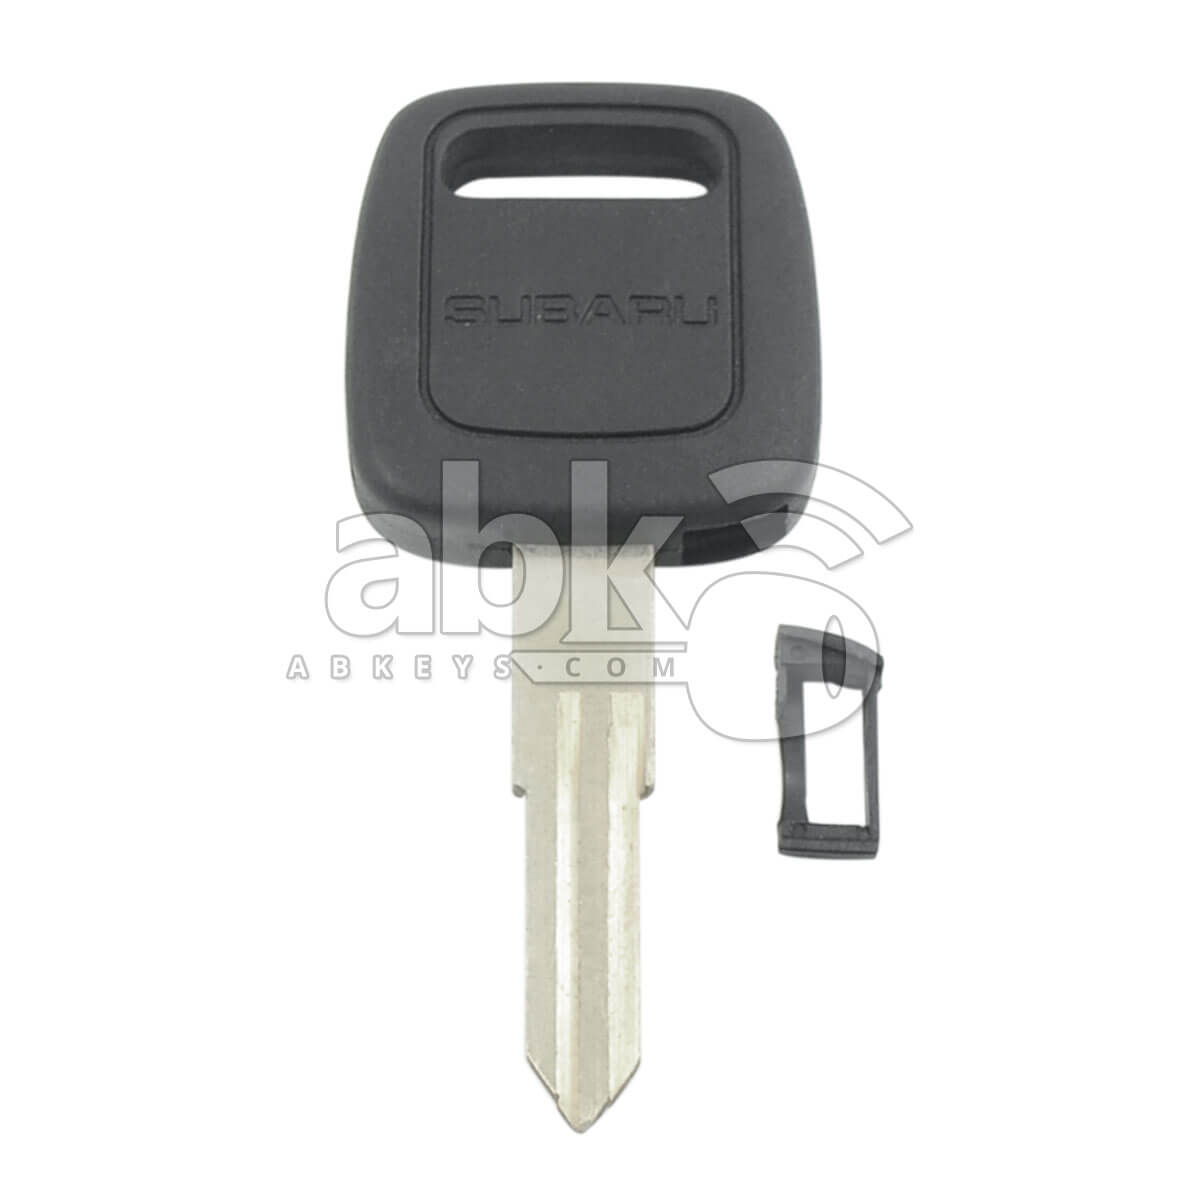 Subaru Chip Less Key NSN11 - ABK-904 - ABKEYS.COM